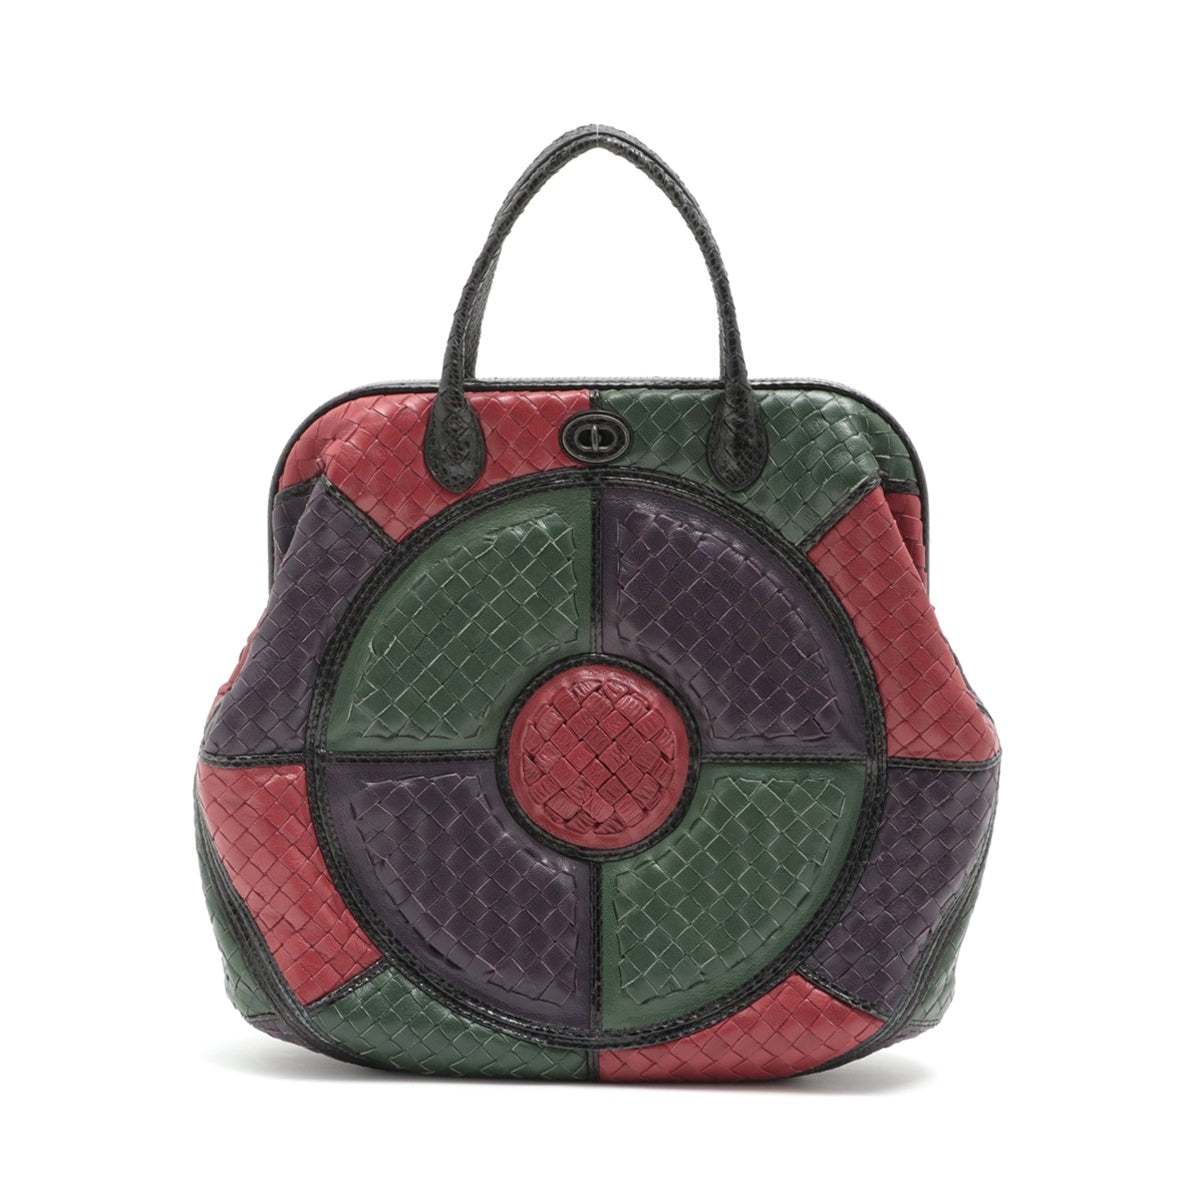 Bottega Veneta Intrecciato Leather  Pearson Handbag Multi-Color